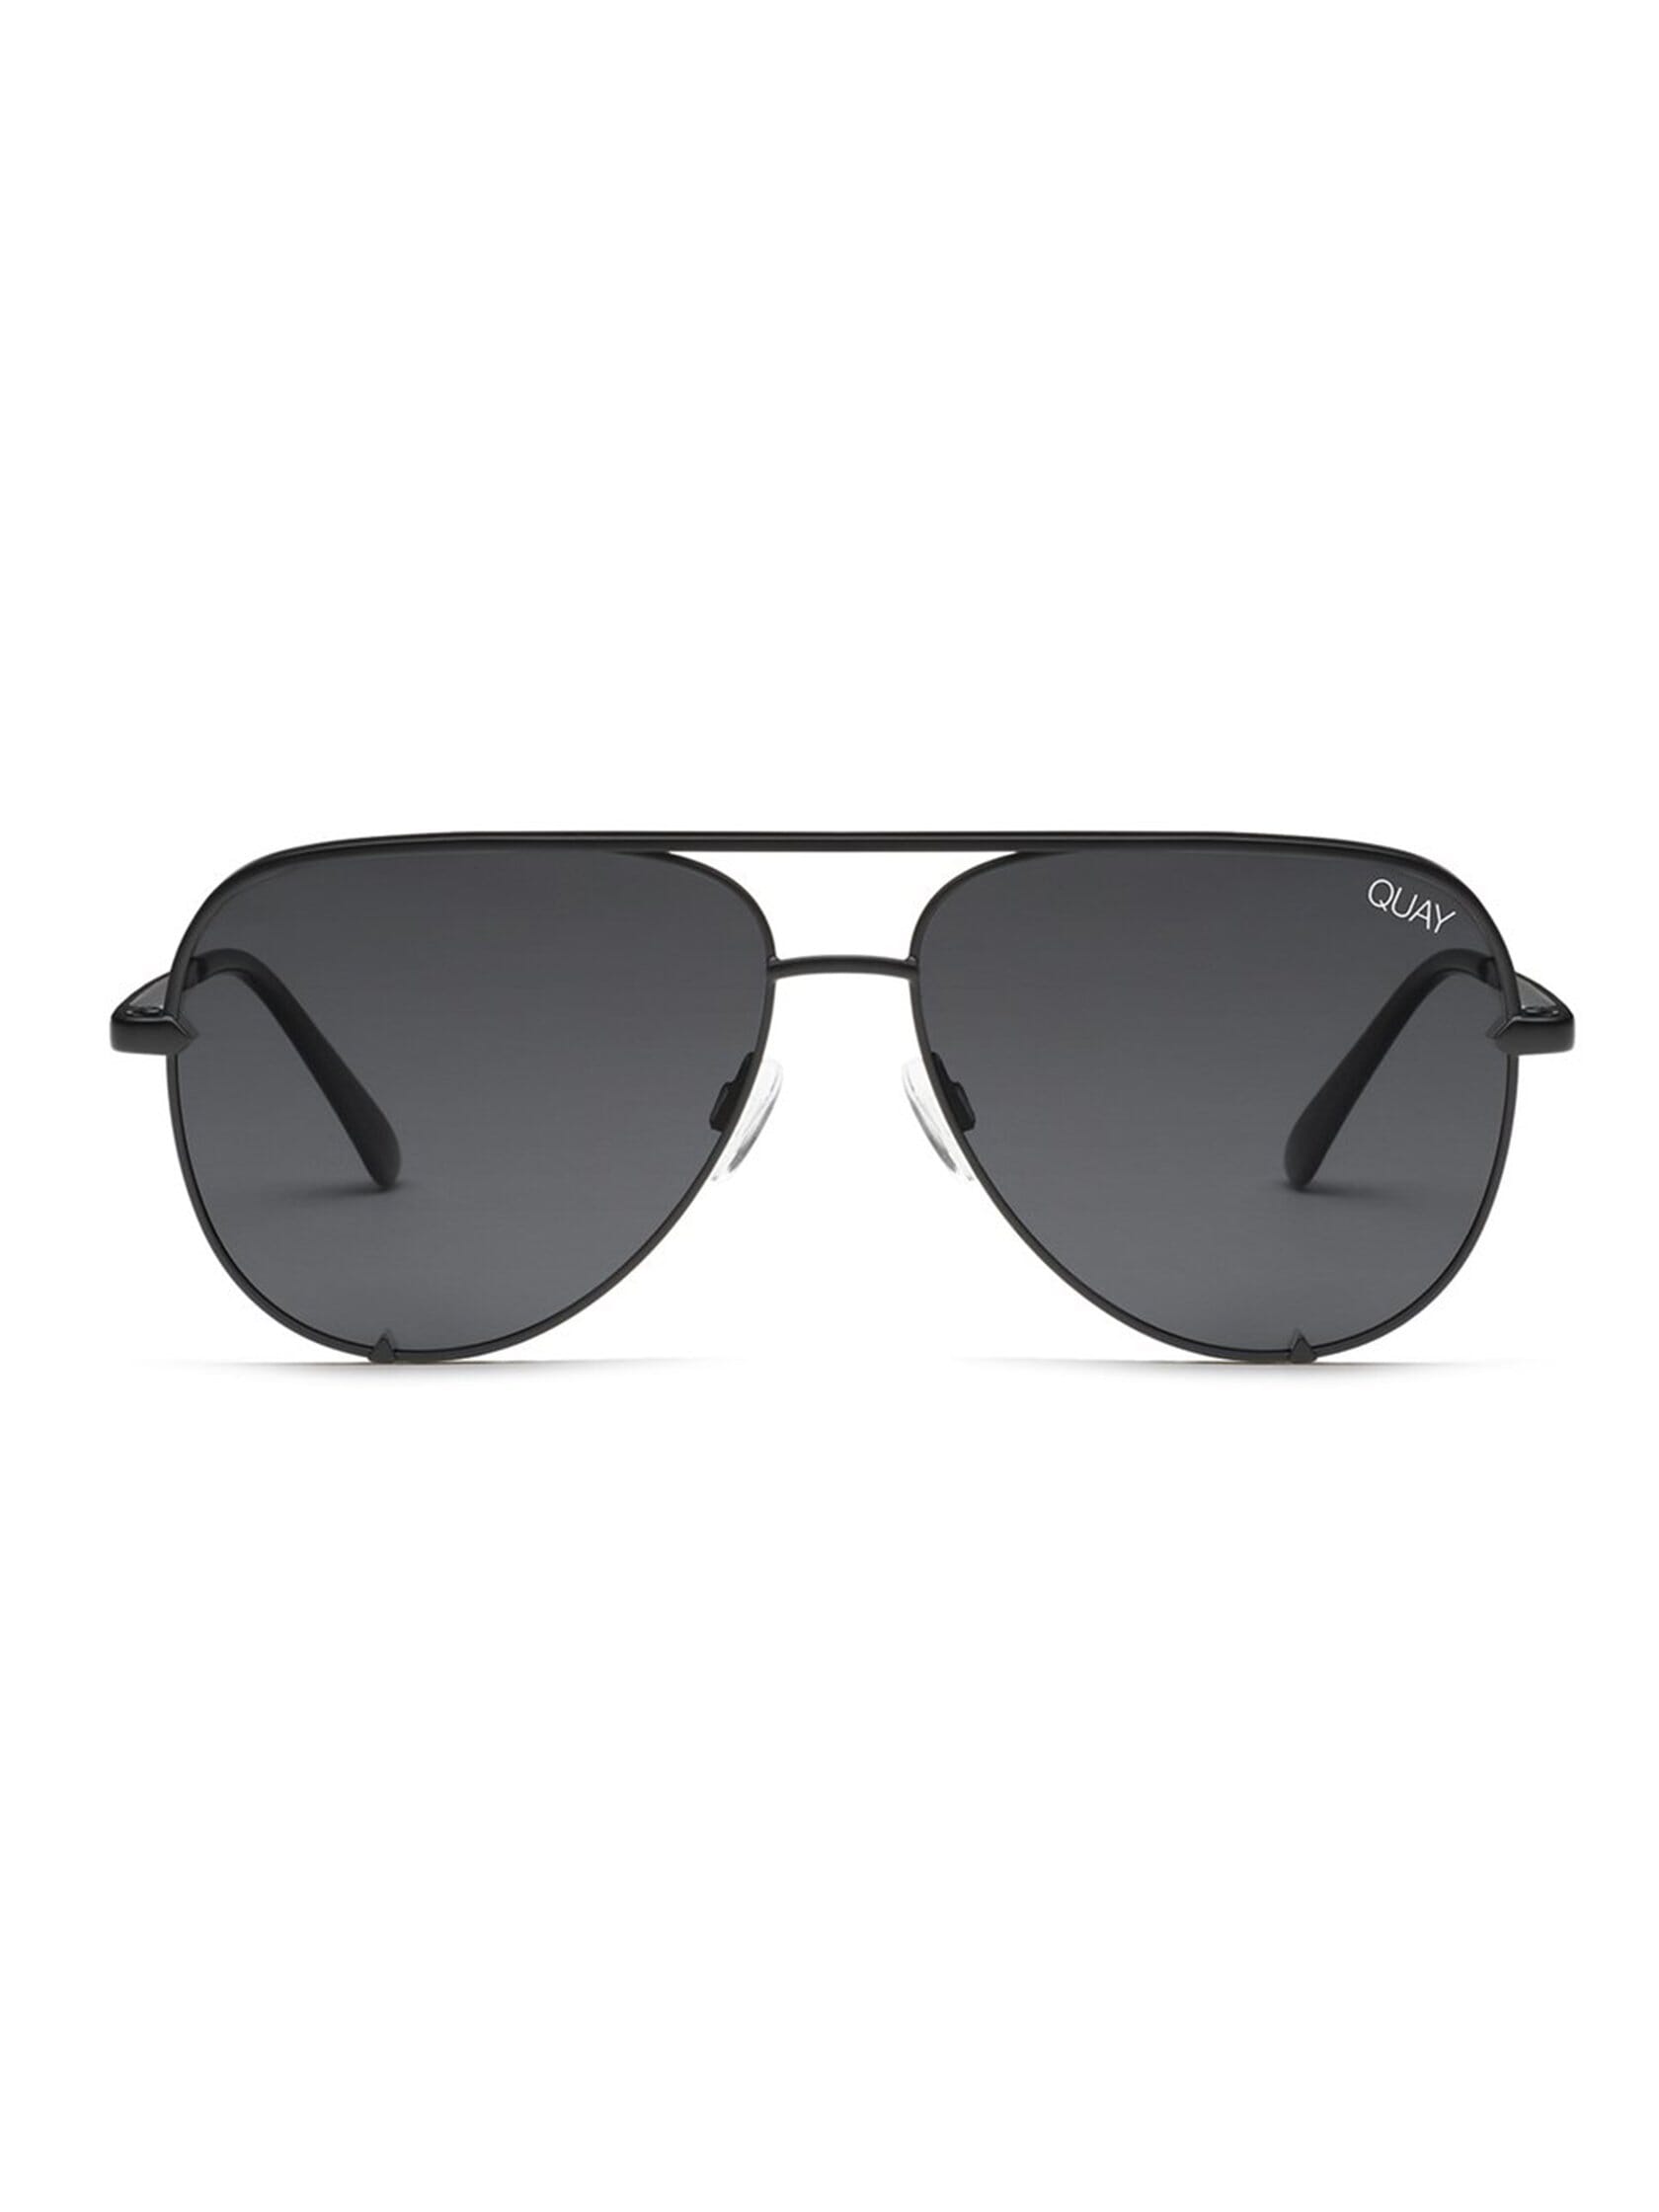 Quay Australia High Key Mini 57mm Aviator Sunglasses (Polarized) in Black/Smoke